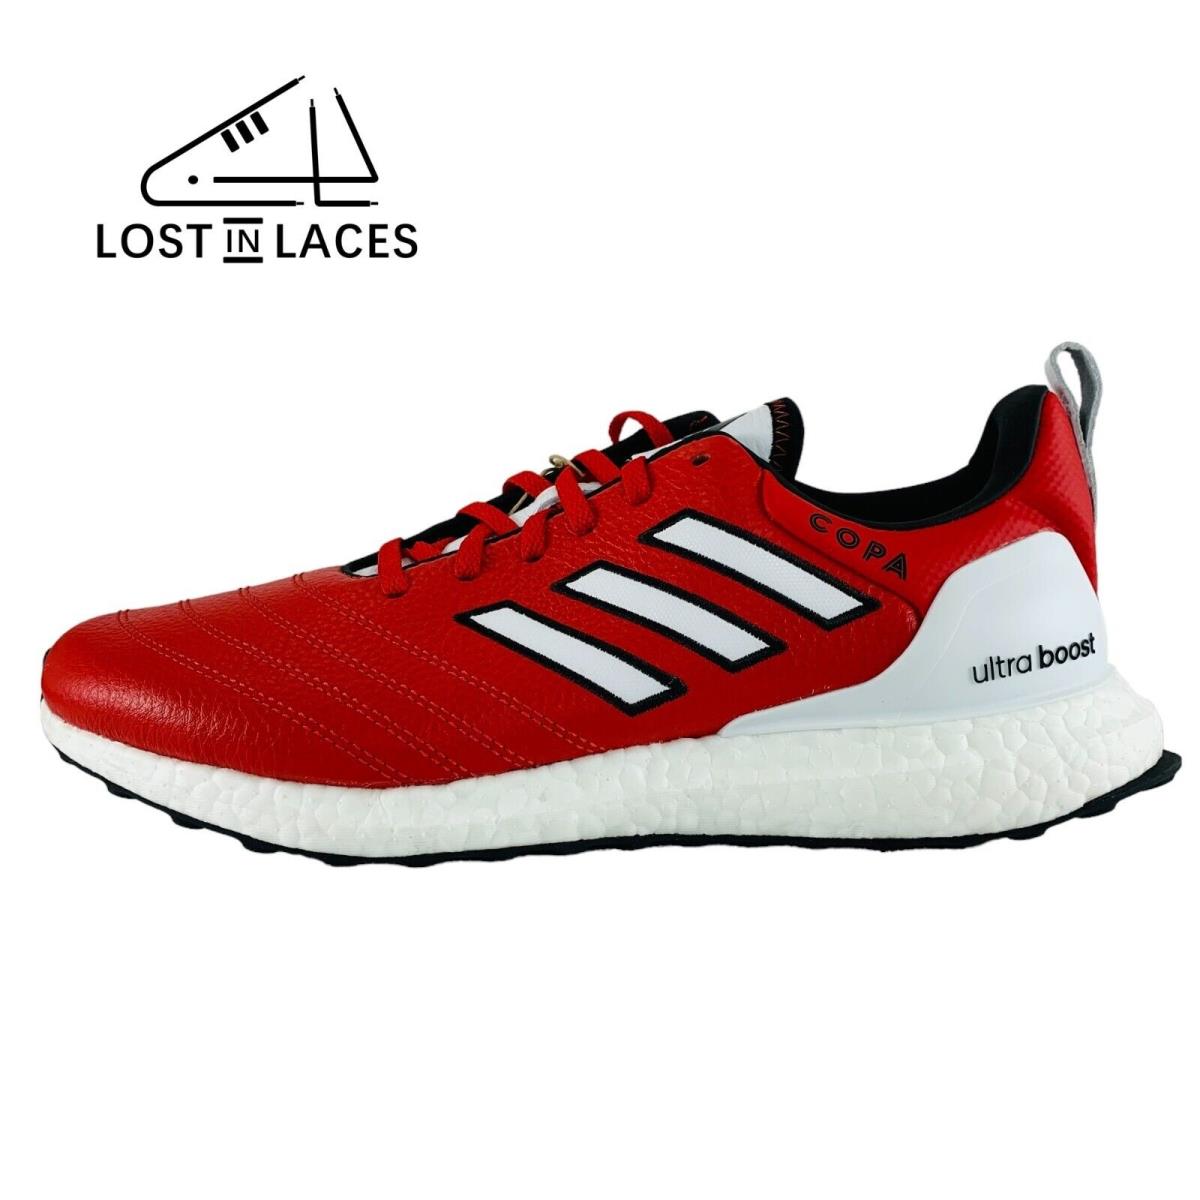 Adidas Copa Ultraboost Dna York Red Bulls Mls Running Shoes Mens Sizes